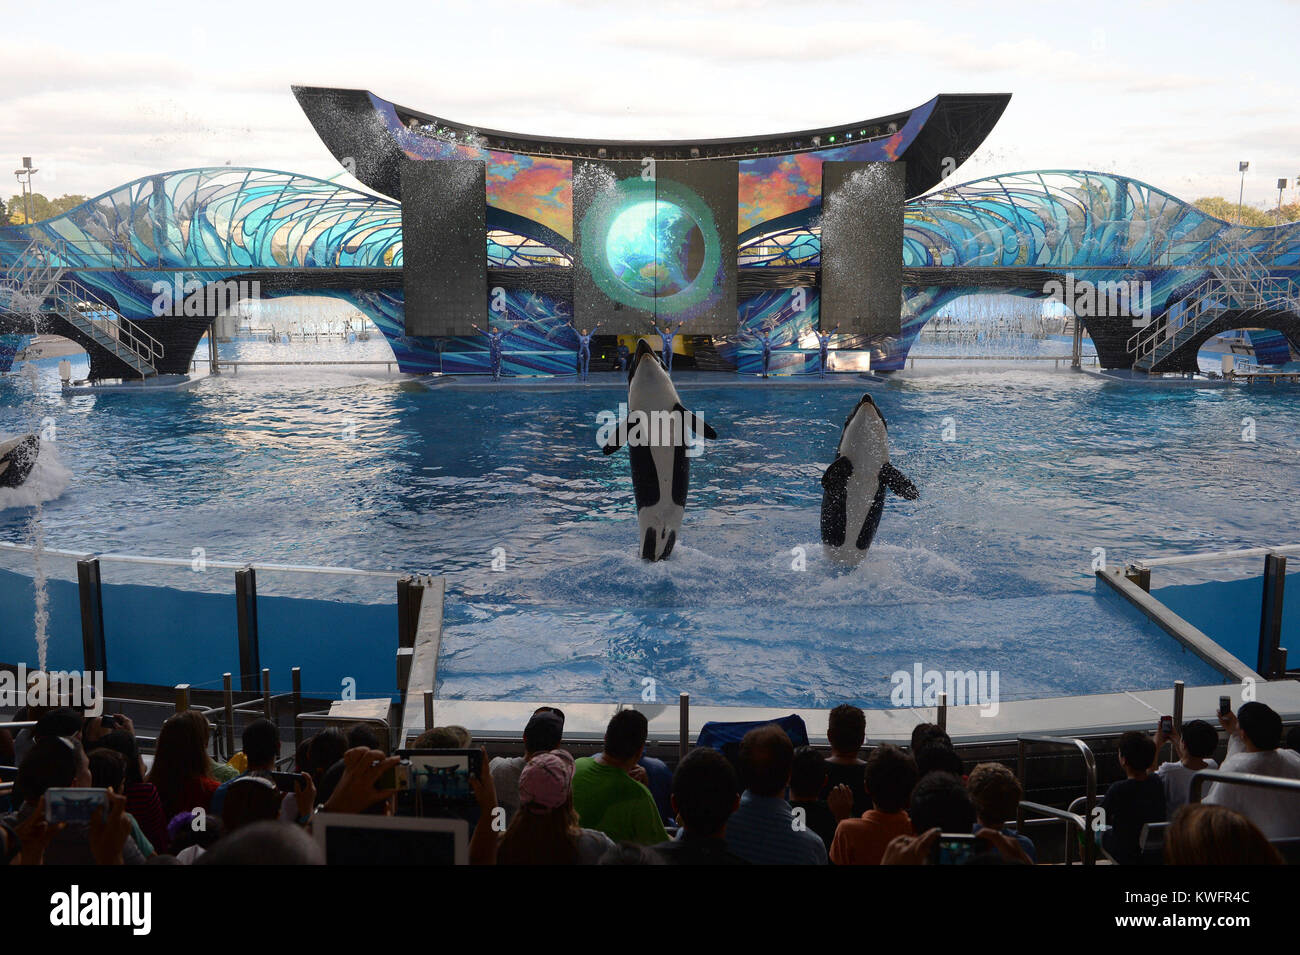 ORLANDO, FL - AUGUST 15: SeaWorld has announced a new 10 million-gallon ...